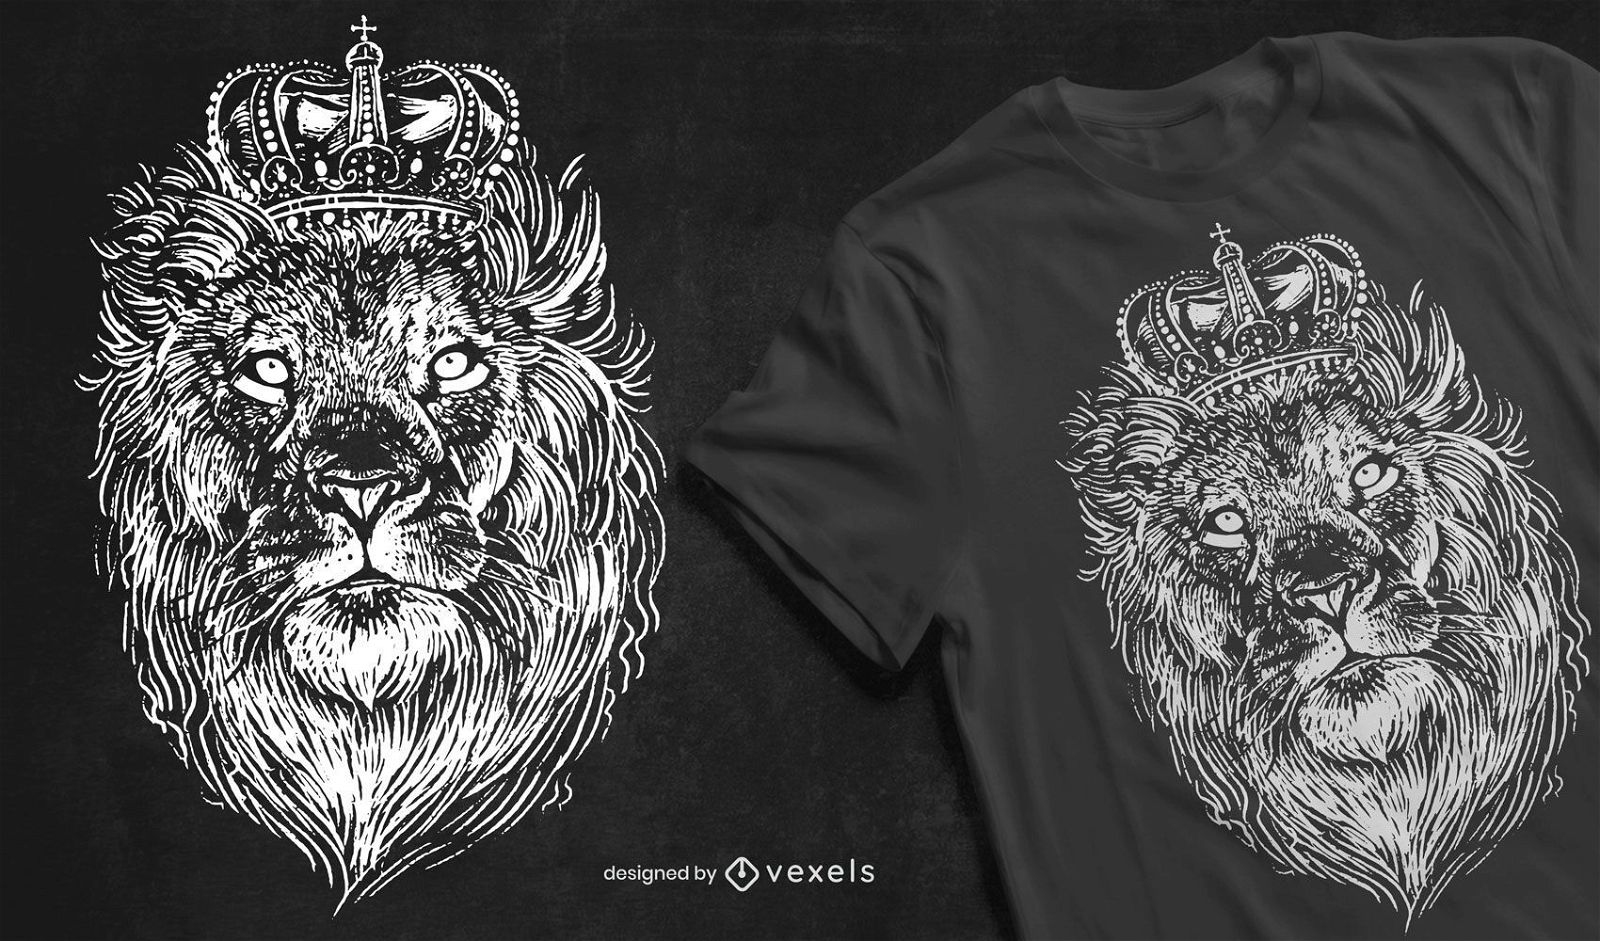 Crowned lion t-shirt design